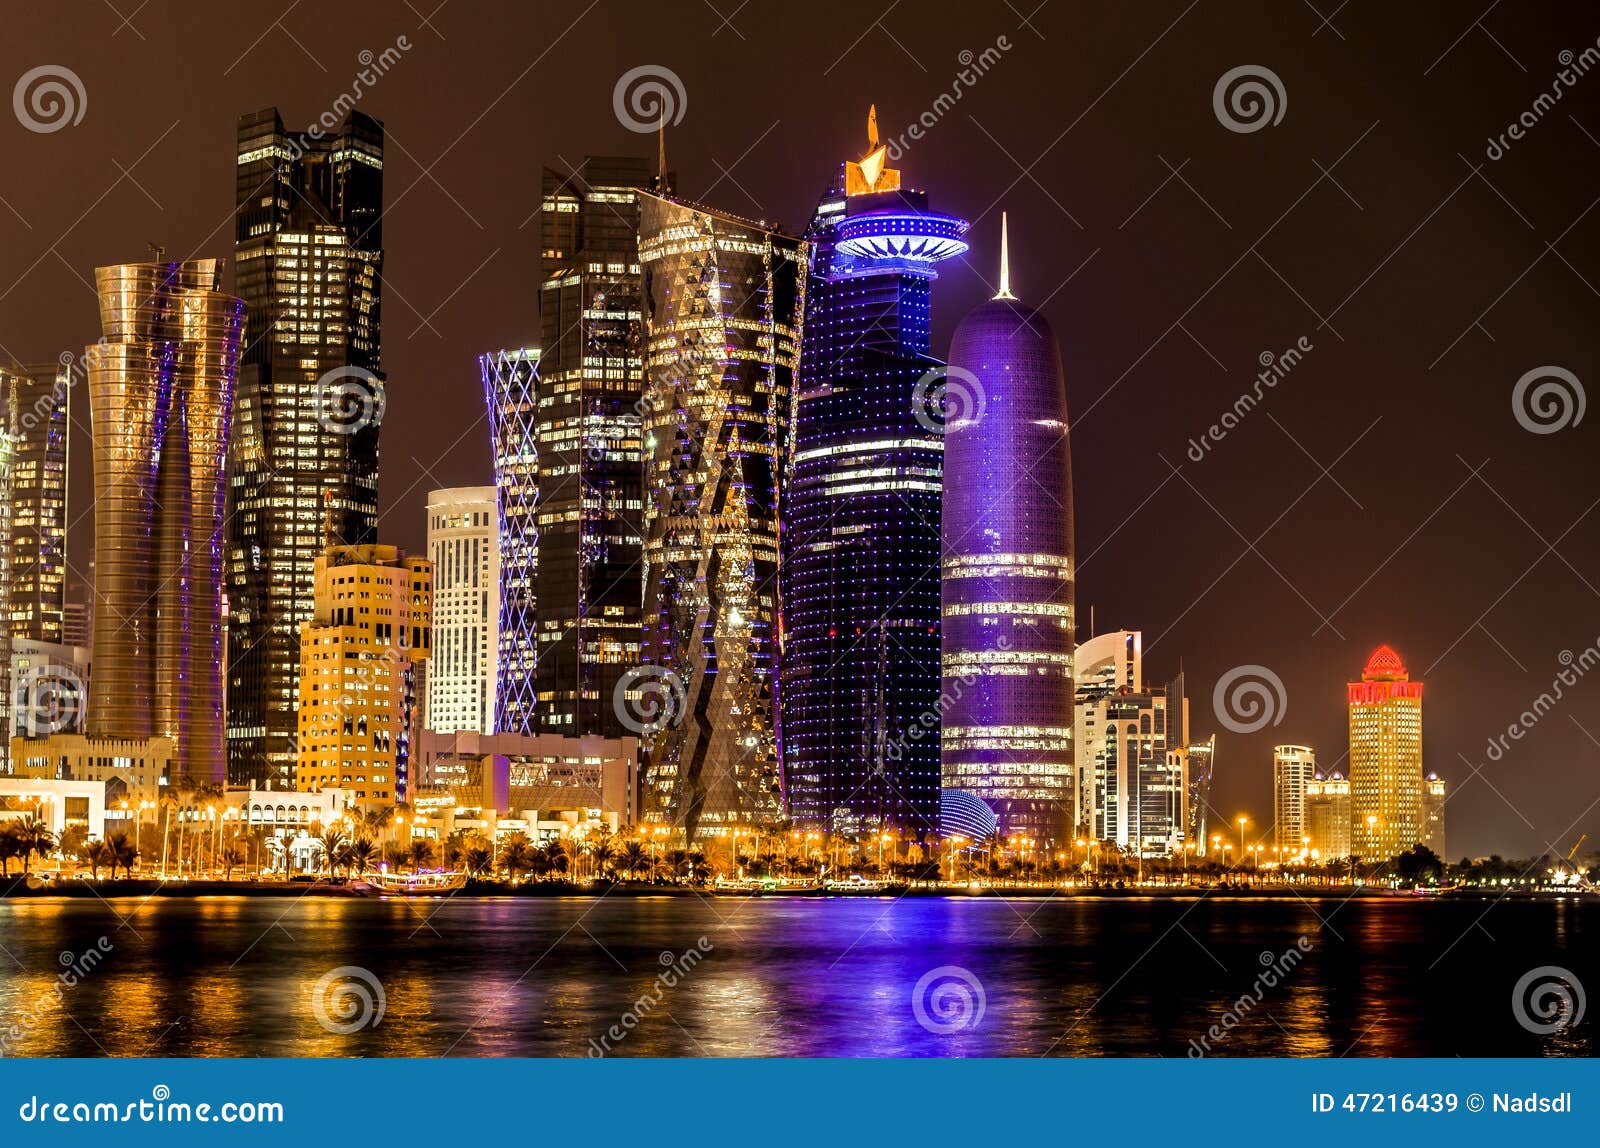 metropolitan night city view